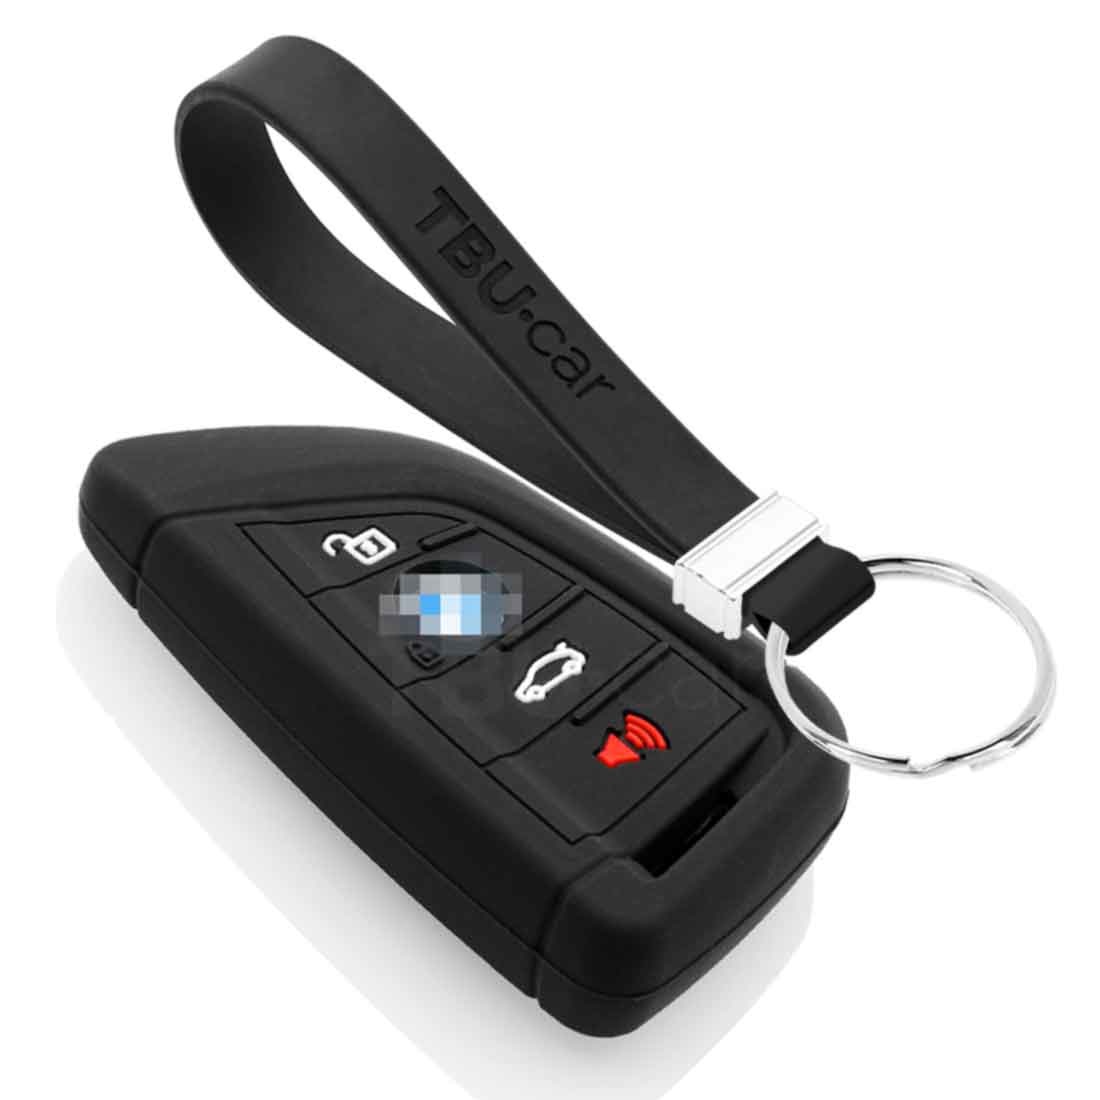 TBU car TBU car Autoschlüssel Hülle kompatibel mit BMW 4 Tasten (Keyless Entry) - Schutzhülle aus Silikon - Auto Schlüsselhülle Cover in Schwarz